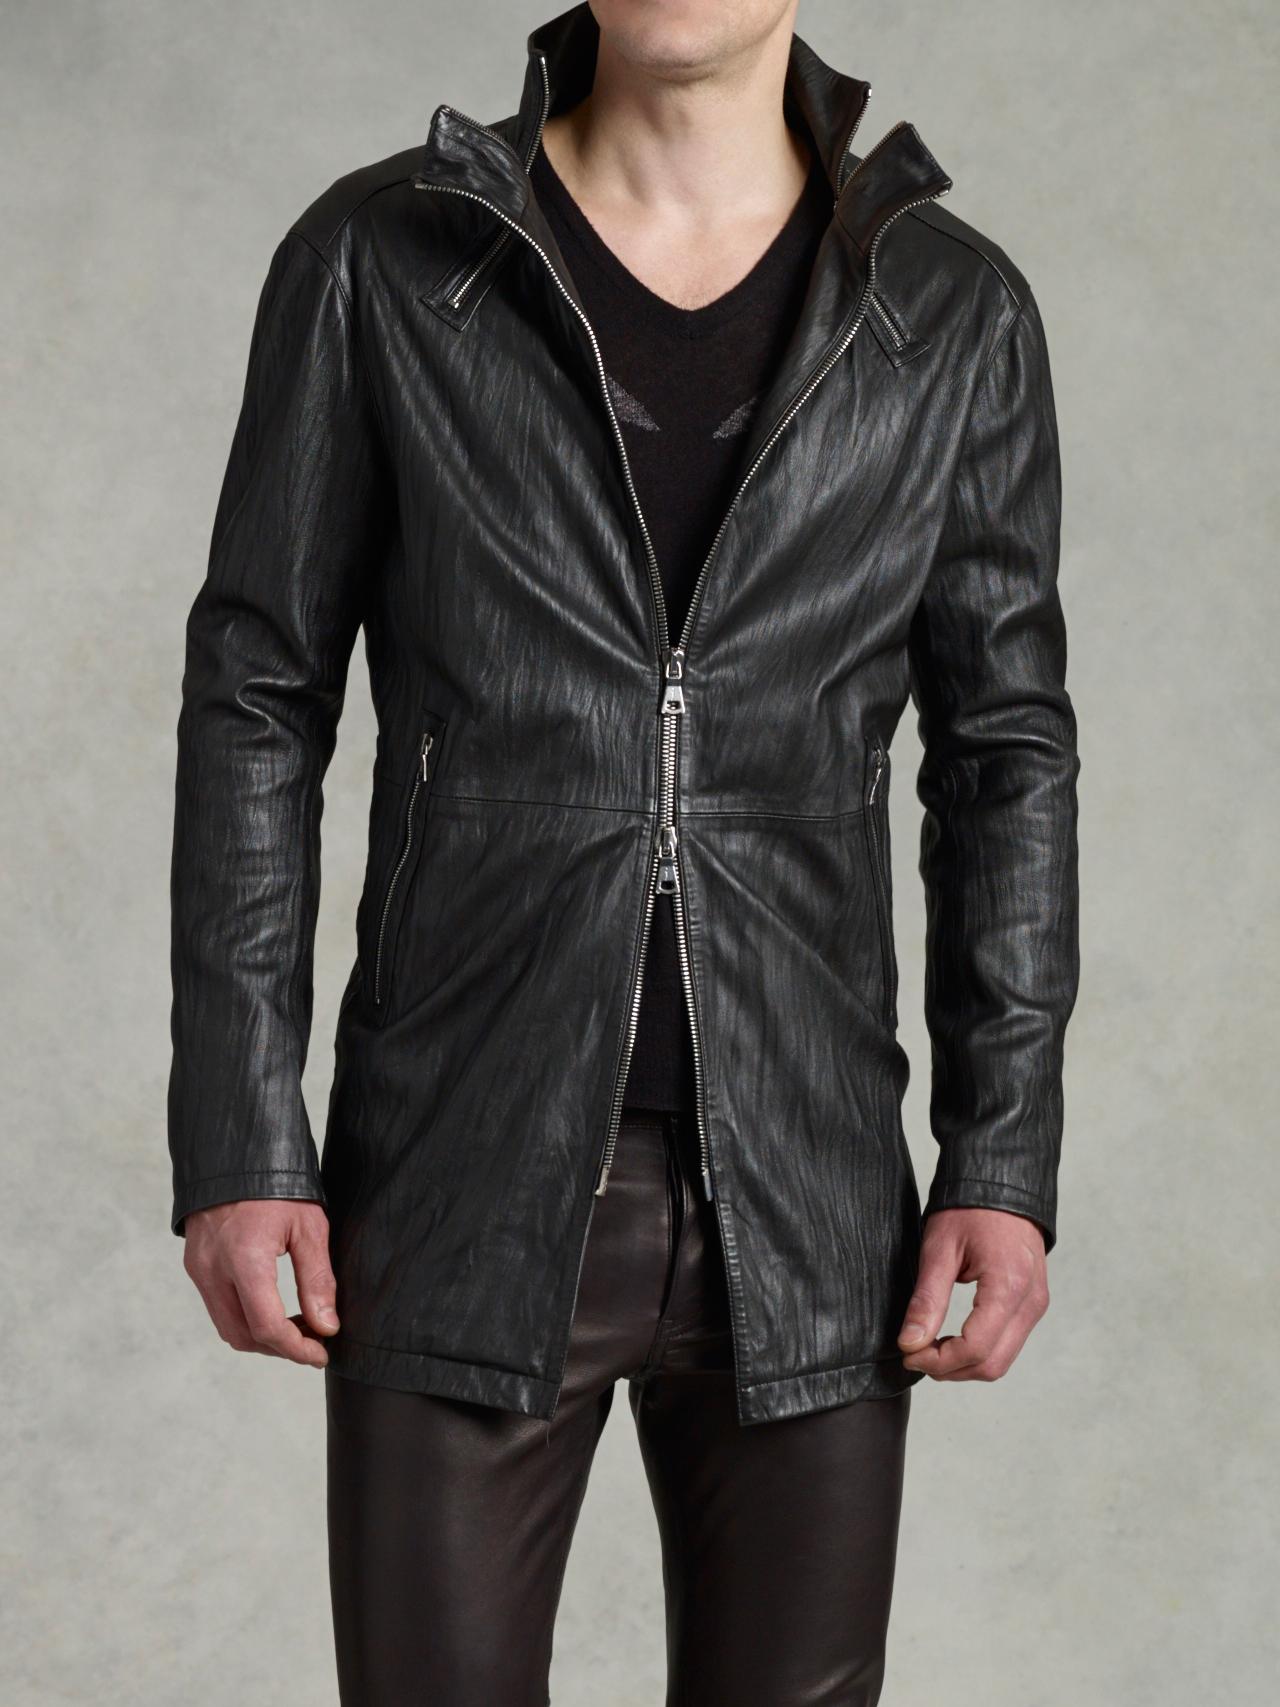 Men's Designer Leather Jackets - Bombers, Suede Moto Jackets, Coats ...